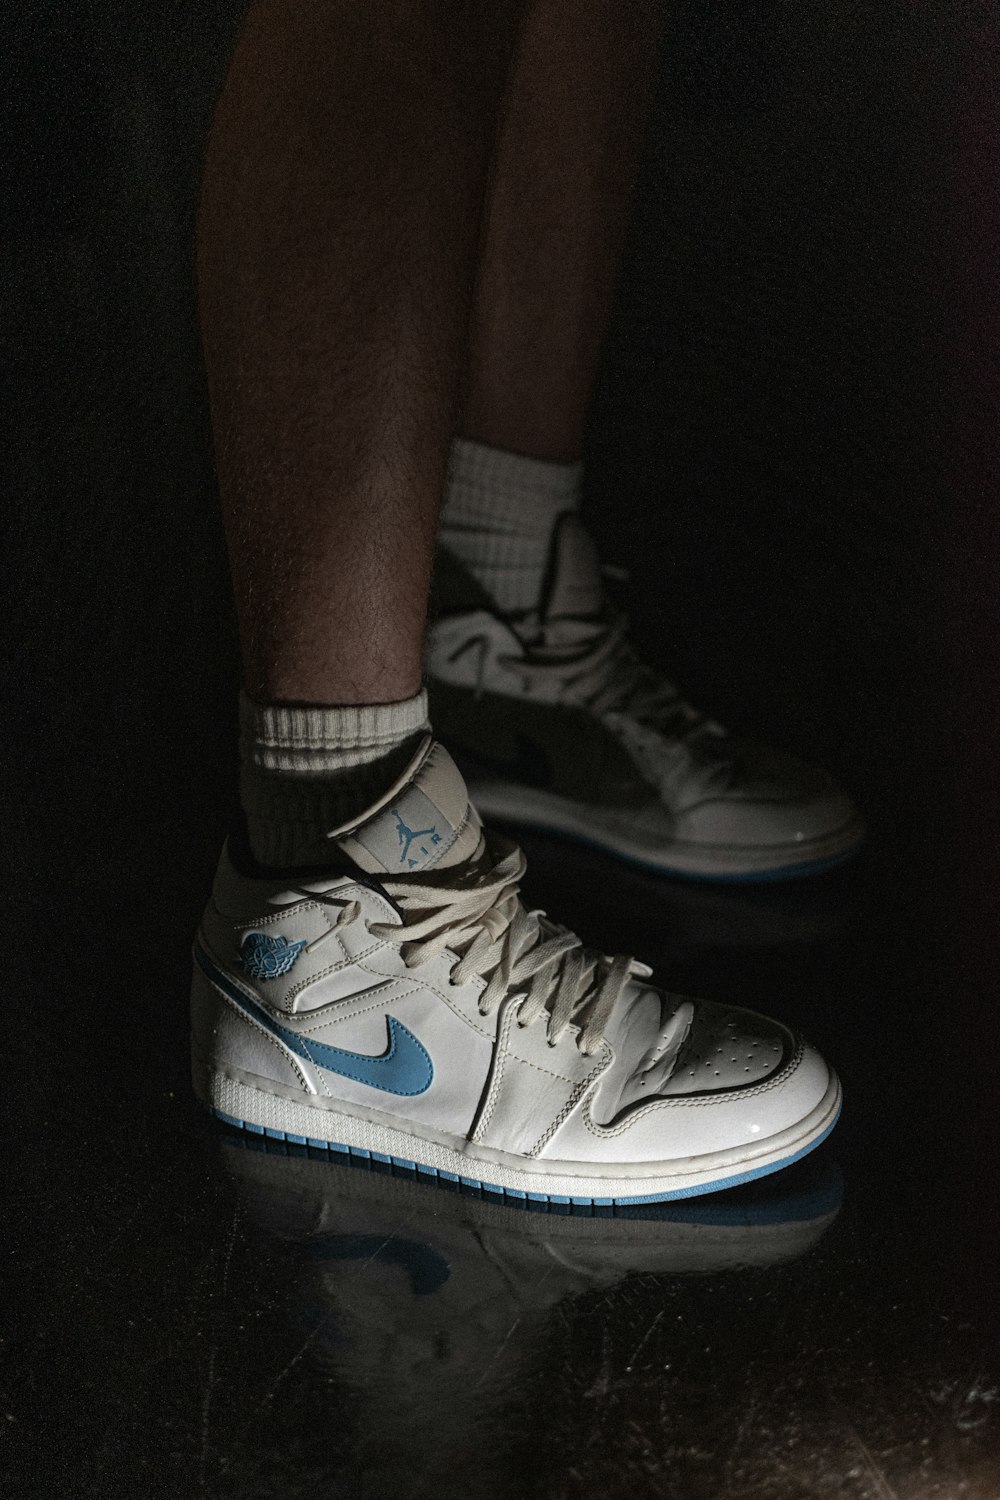 blue-and-white Air Jordan 1 shoes